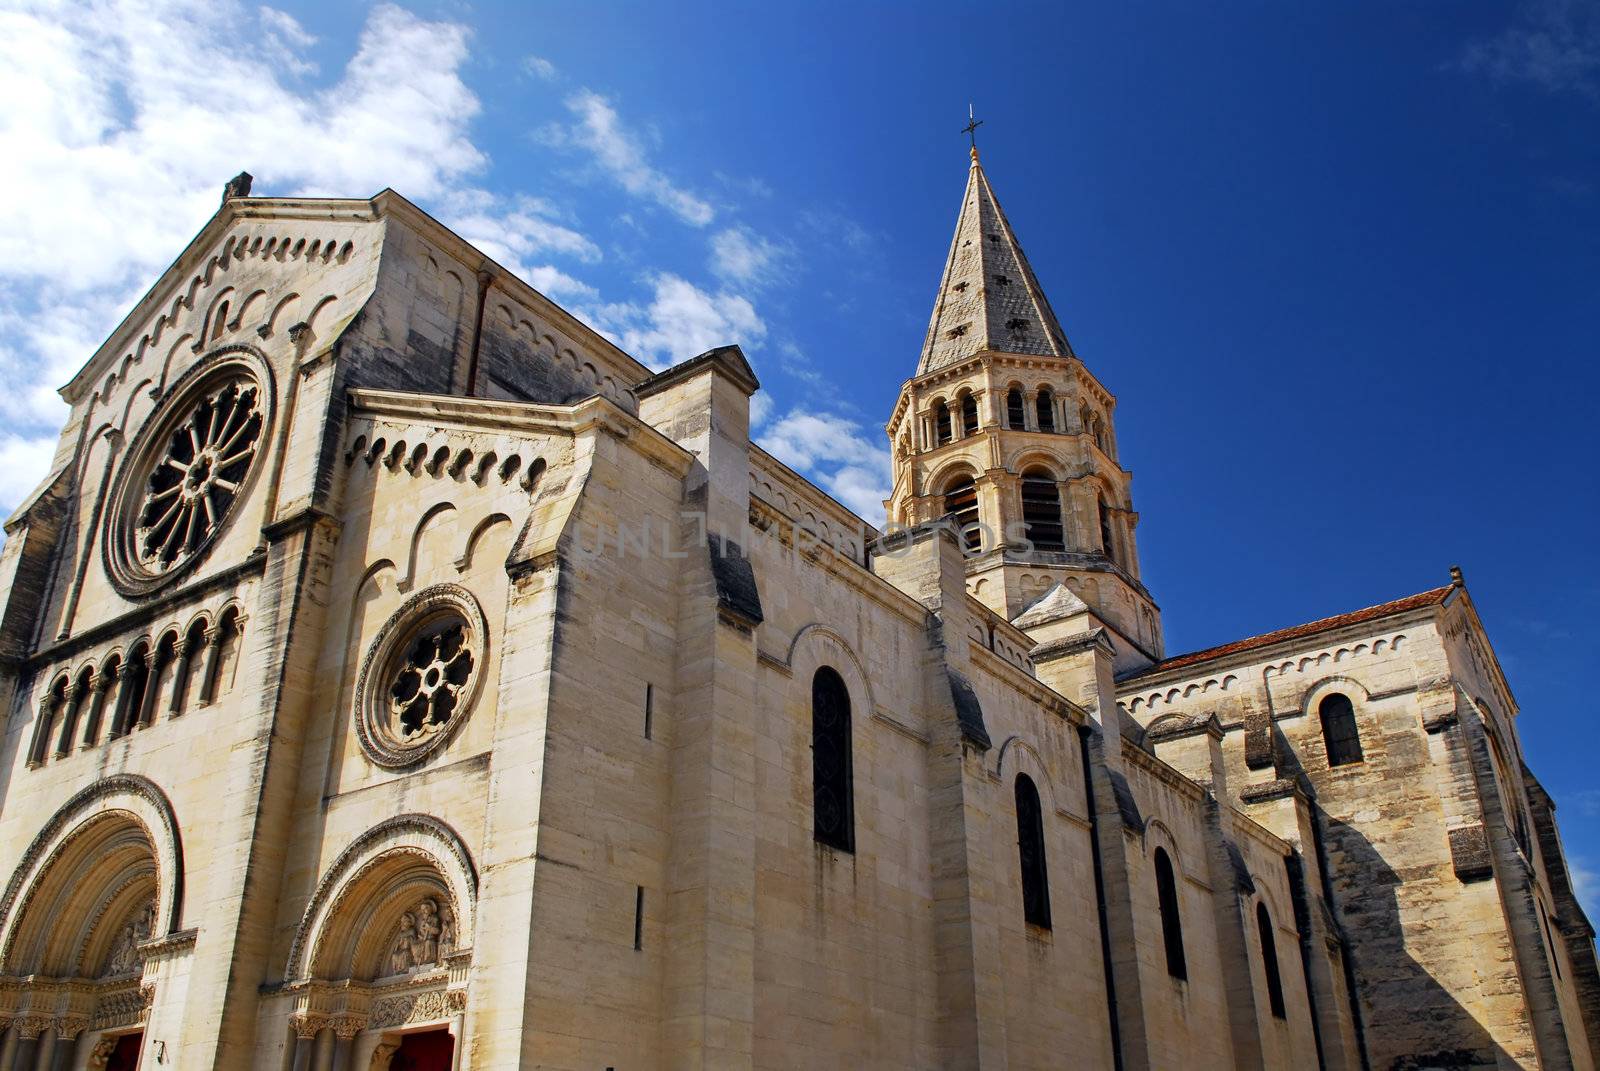 Gothic church in Nimes France by elenathewise